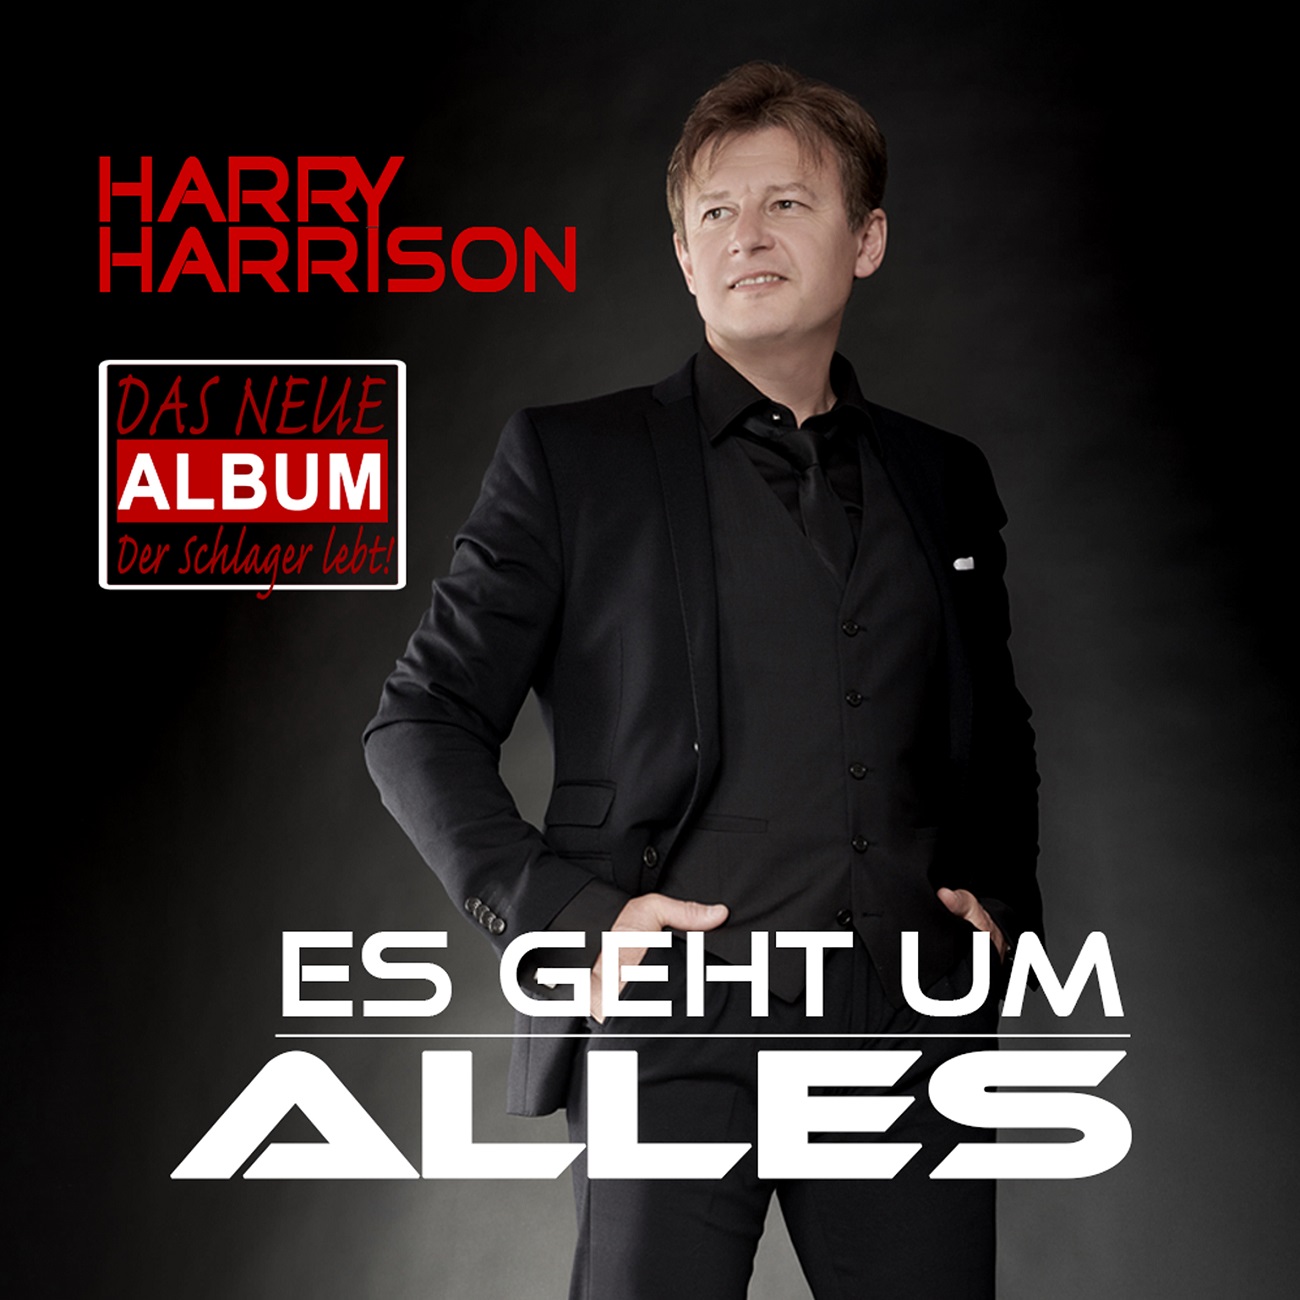 Harry Harrison - Es geht um alles - Albumcover.jpg